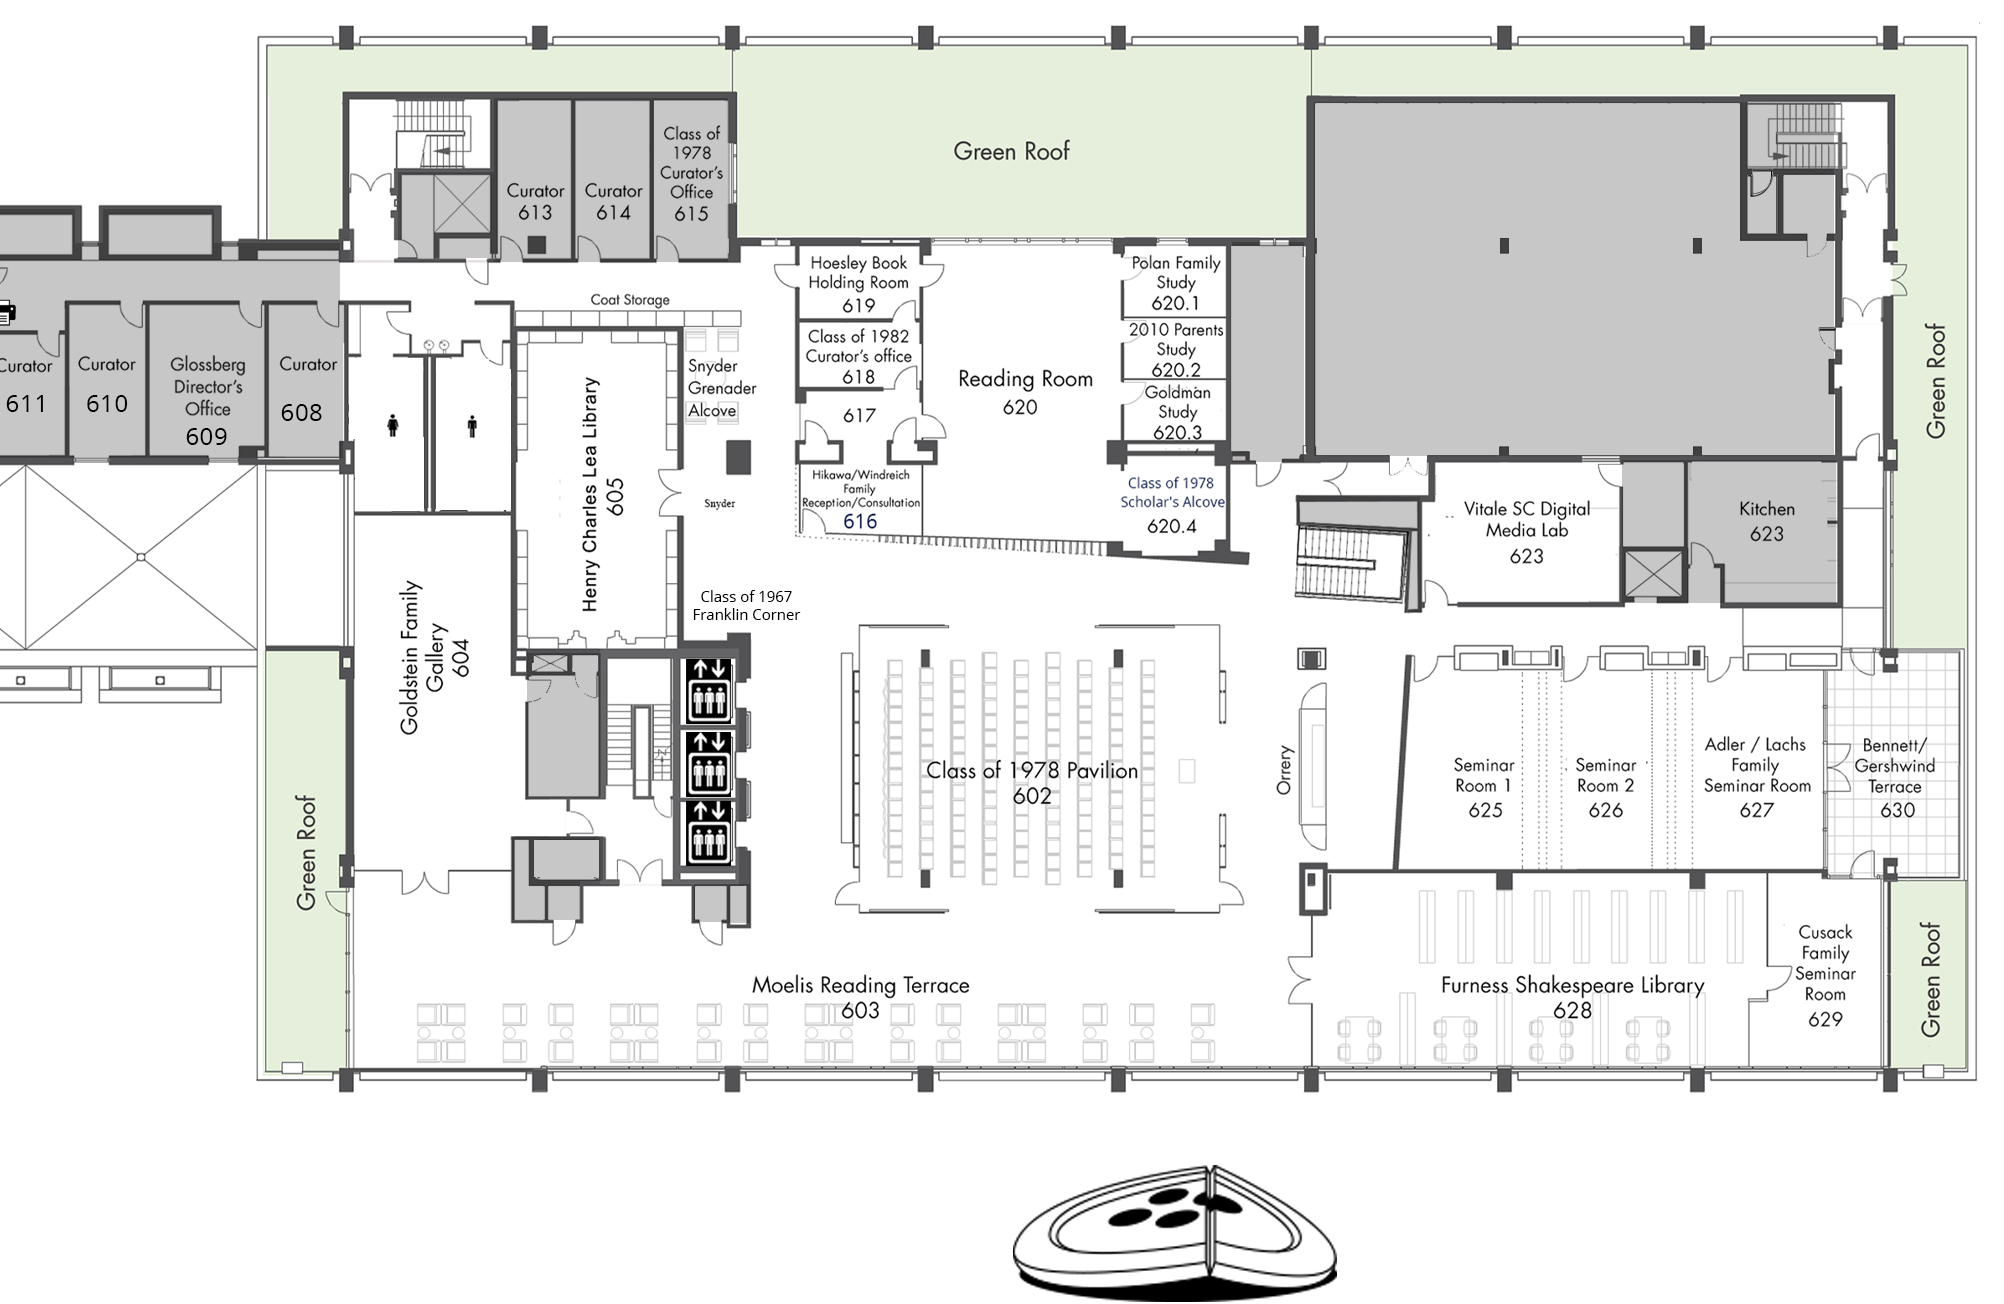 sixth floor plan, Van Pelt-Dietrich Library Center. Full description is linked below.